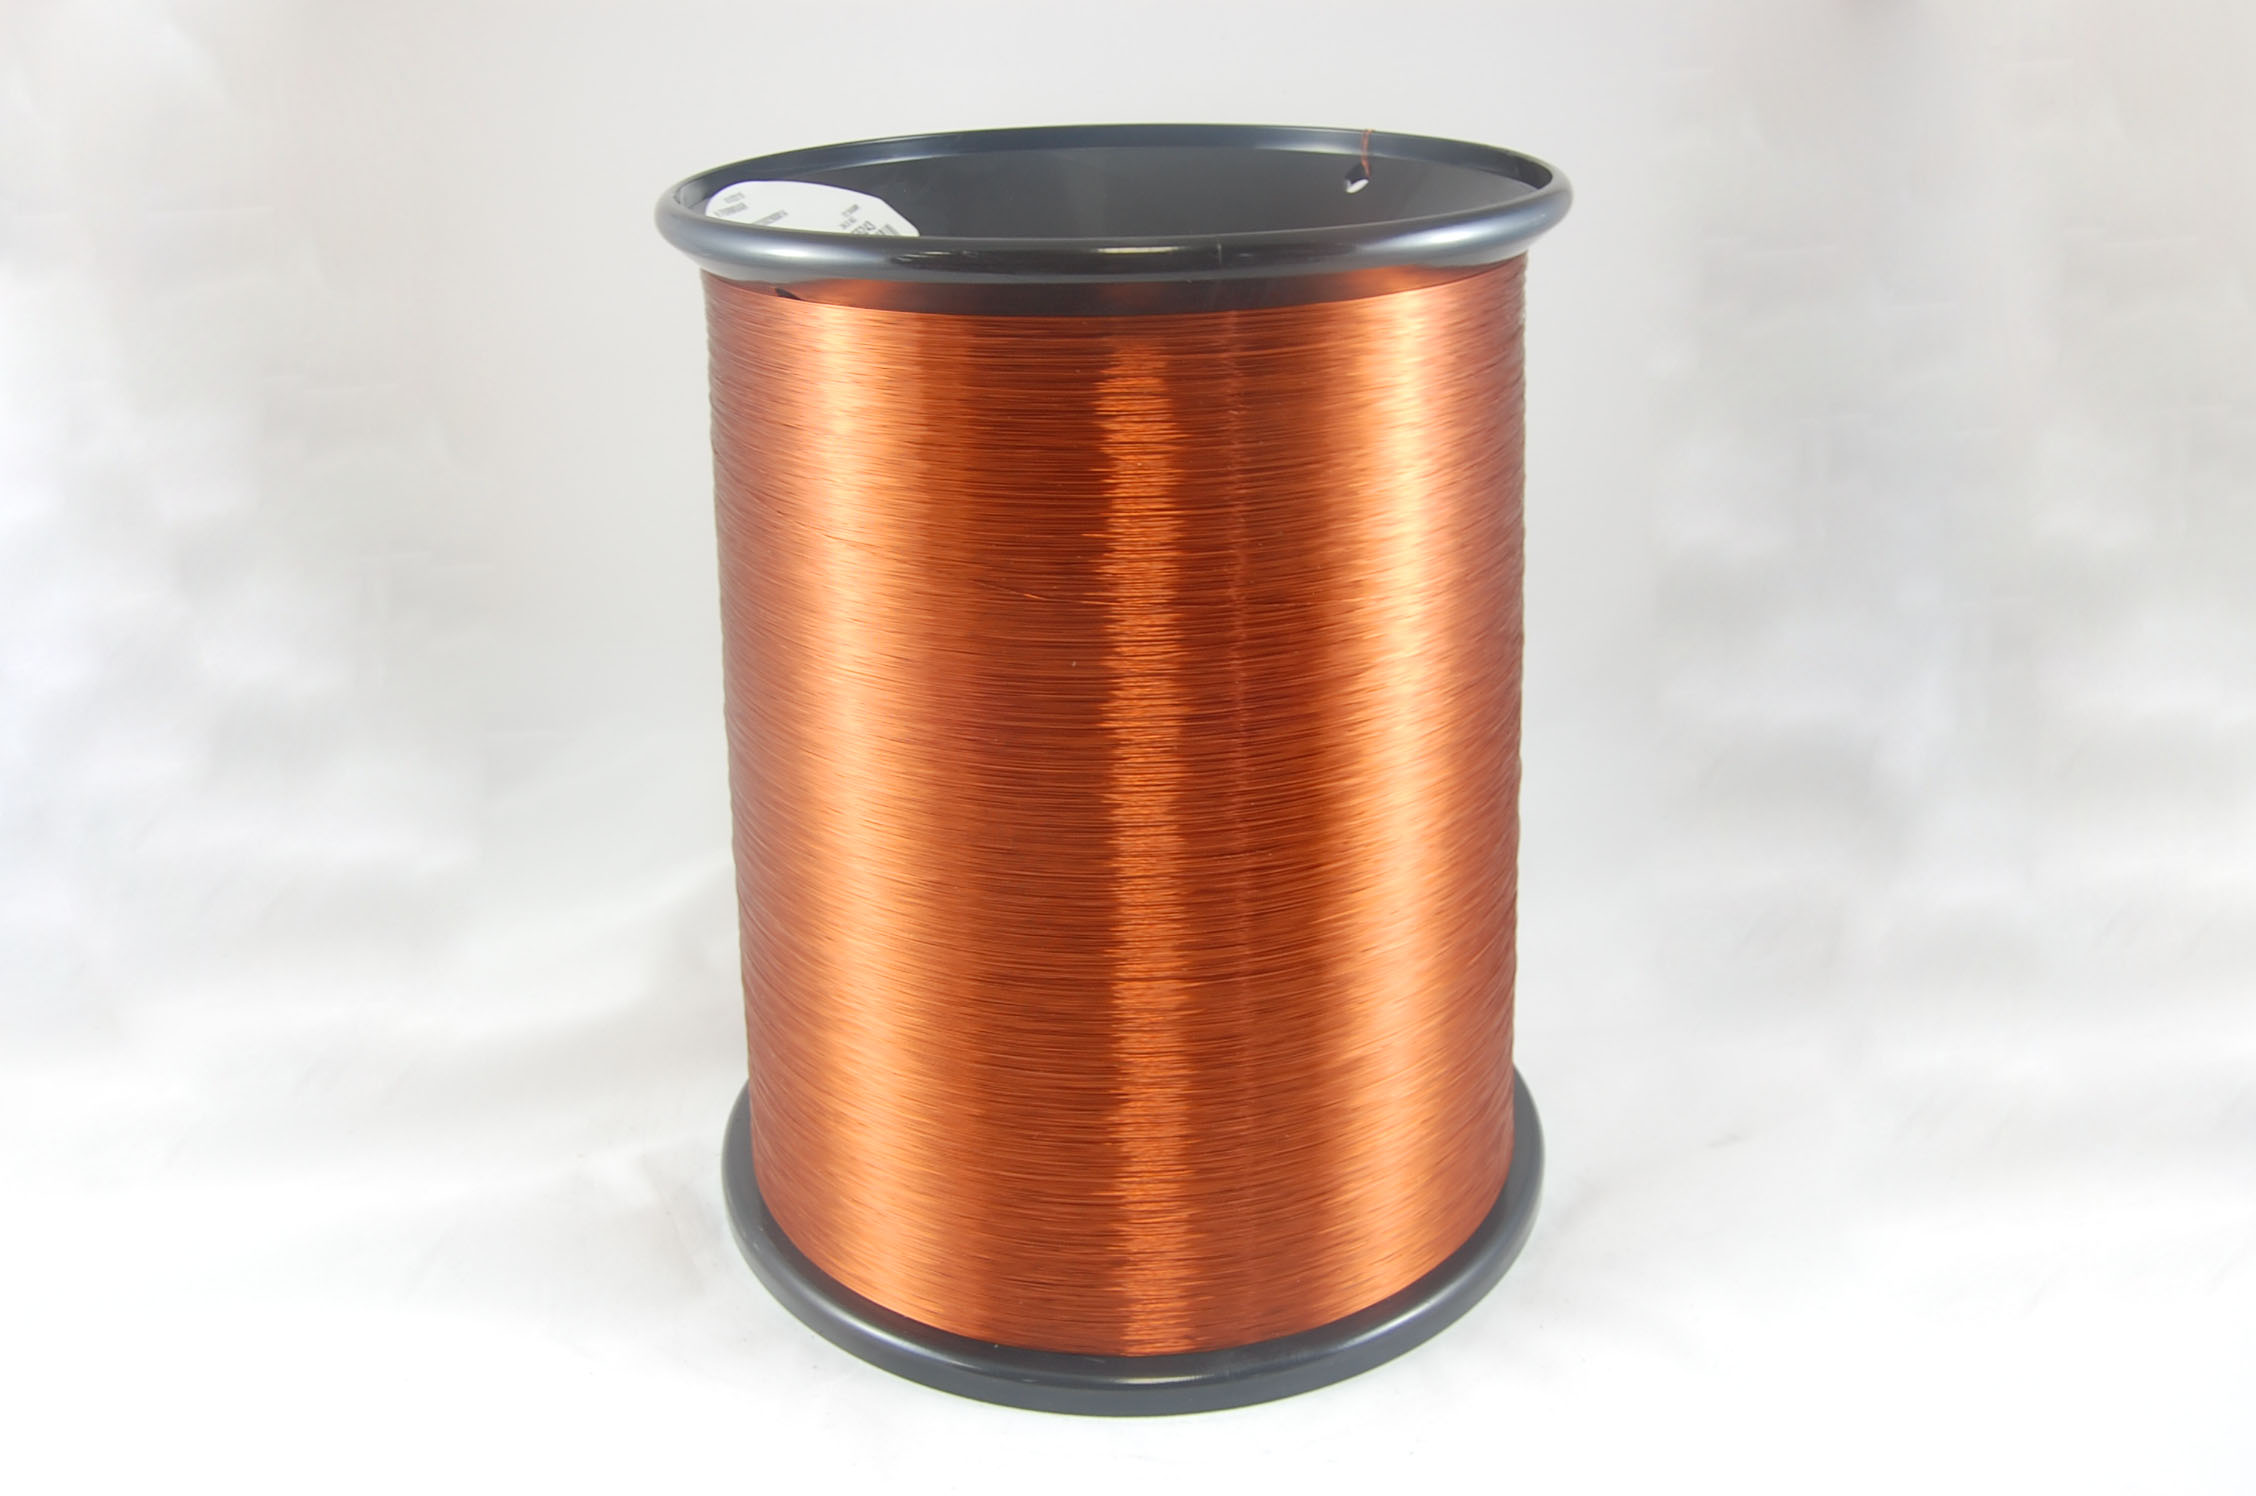 #20 Heavy INVEFORM Round MW 15 Copper Magnet Wire 105°C, copper,  85 LB pail (average wght.)